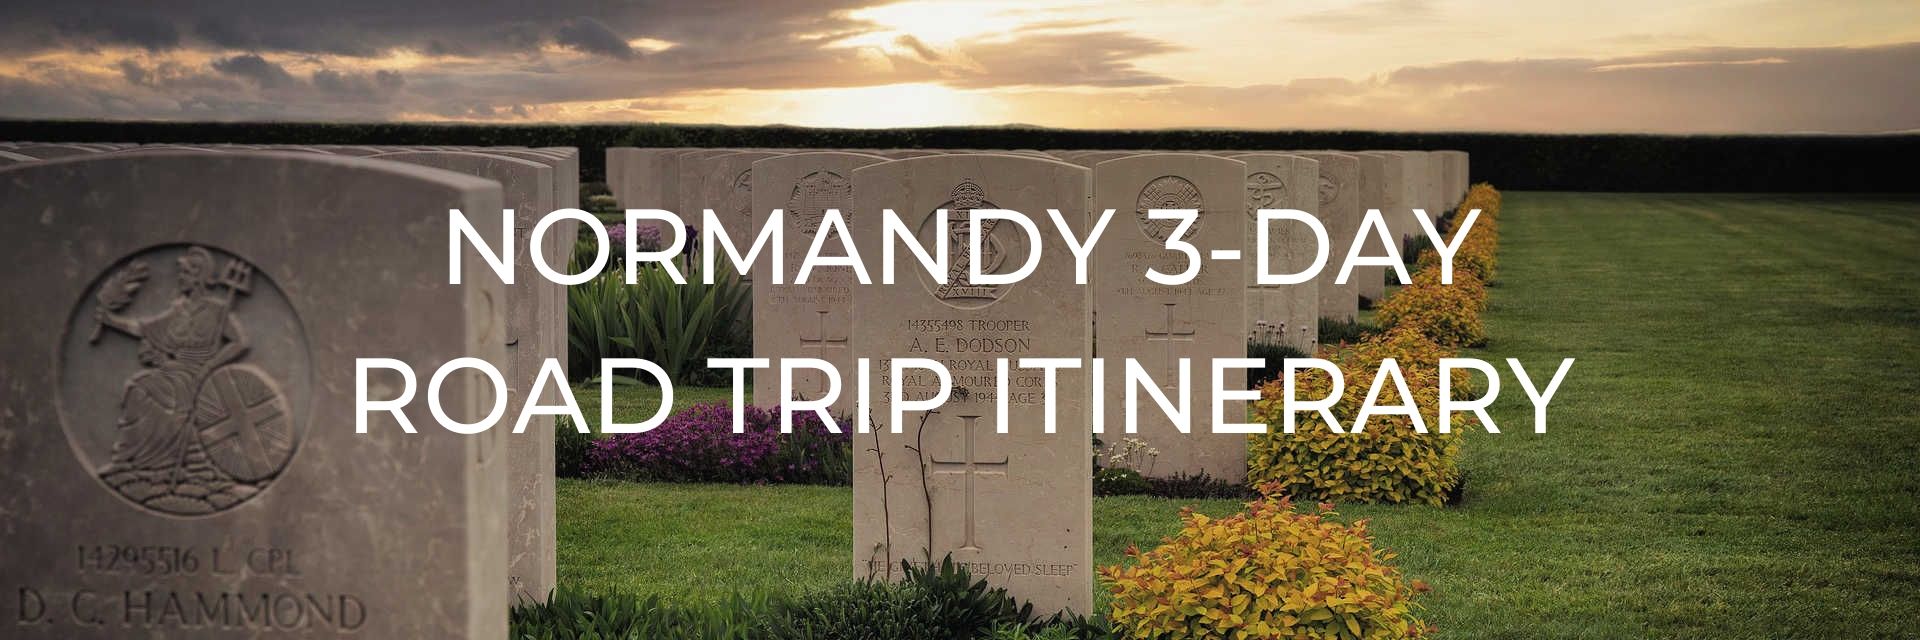 Normandy Itinerary Desktop Image